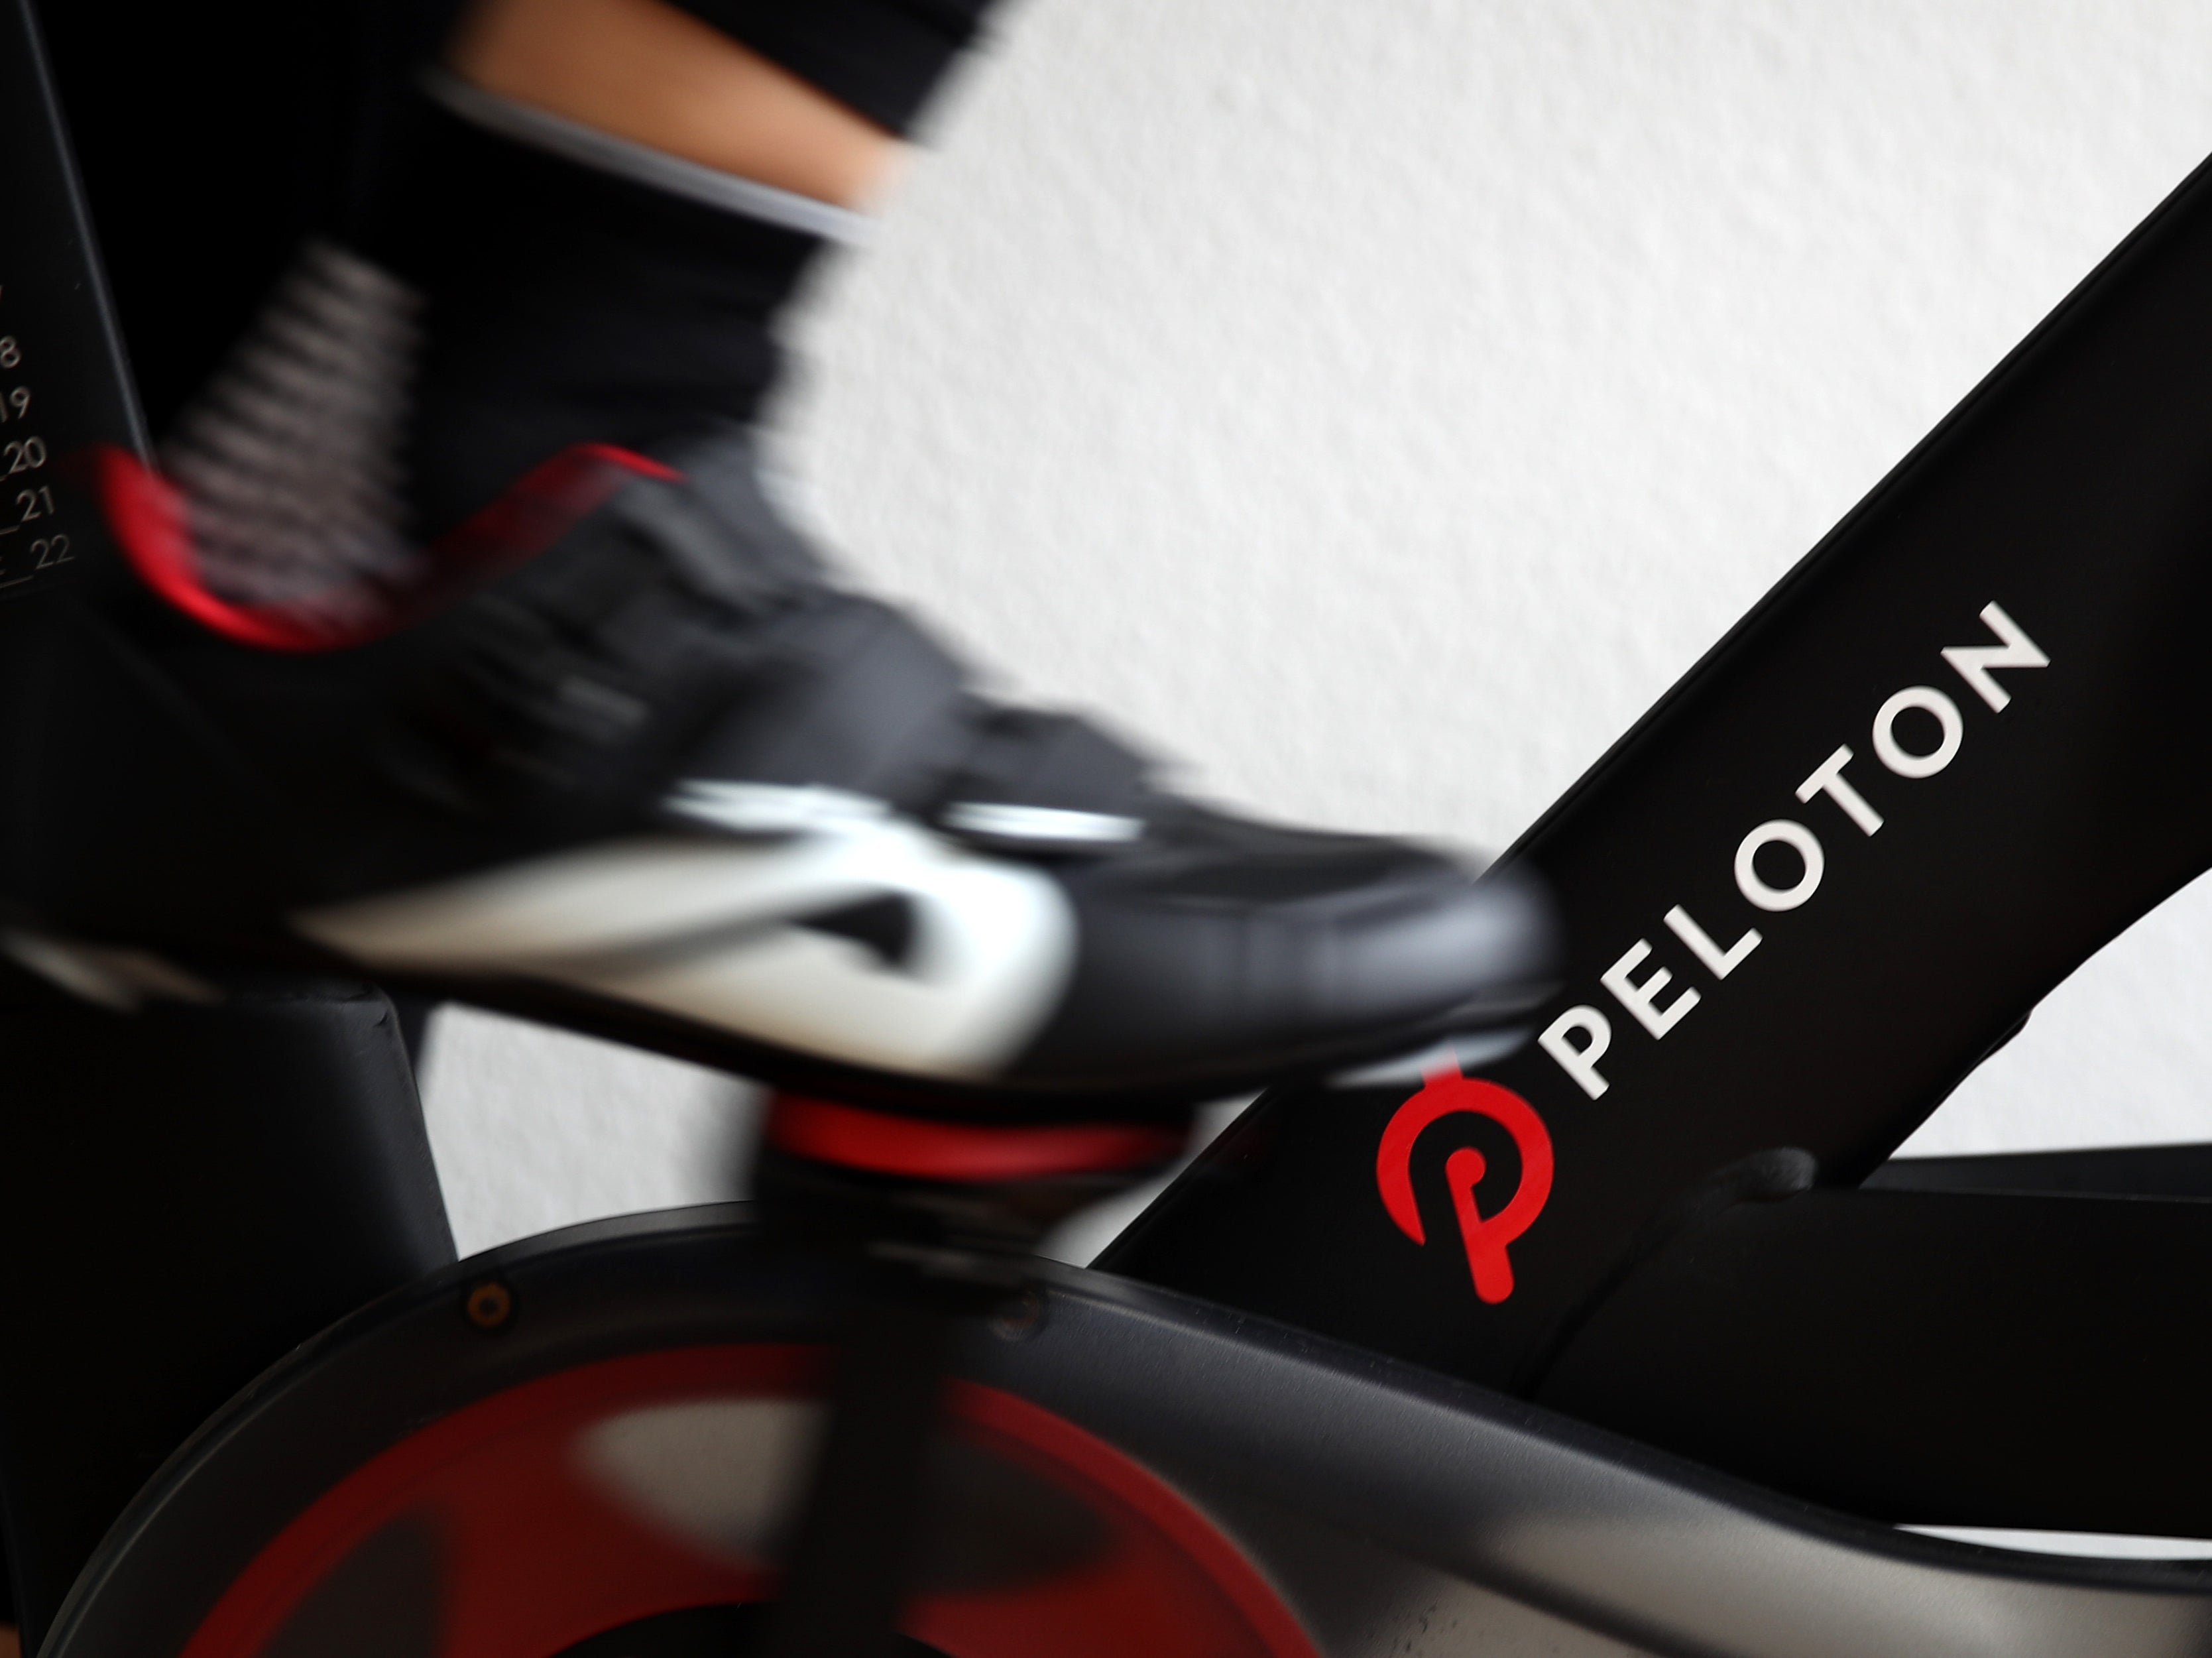 pedals for peloton bike